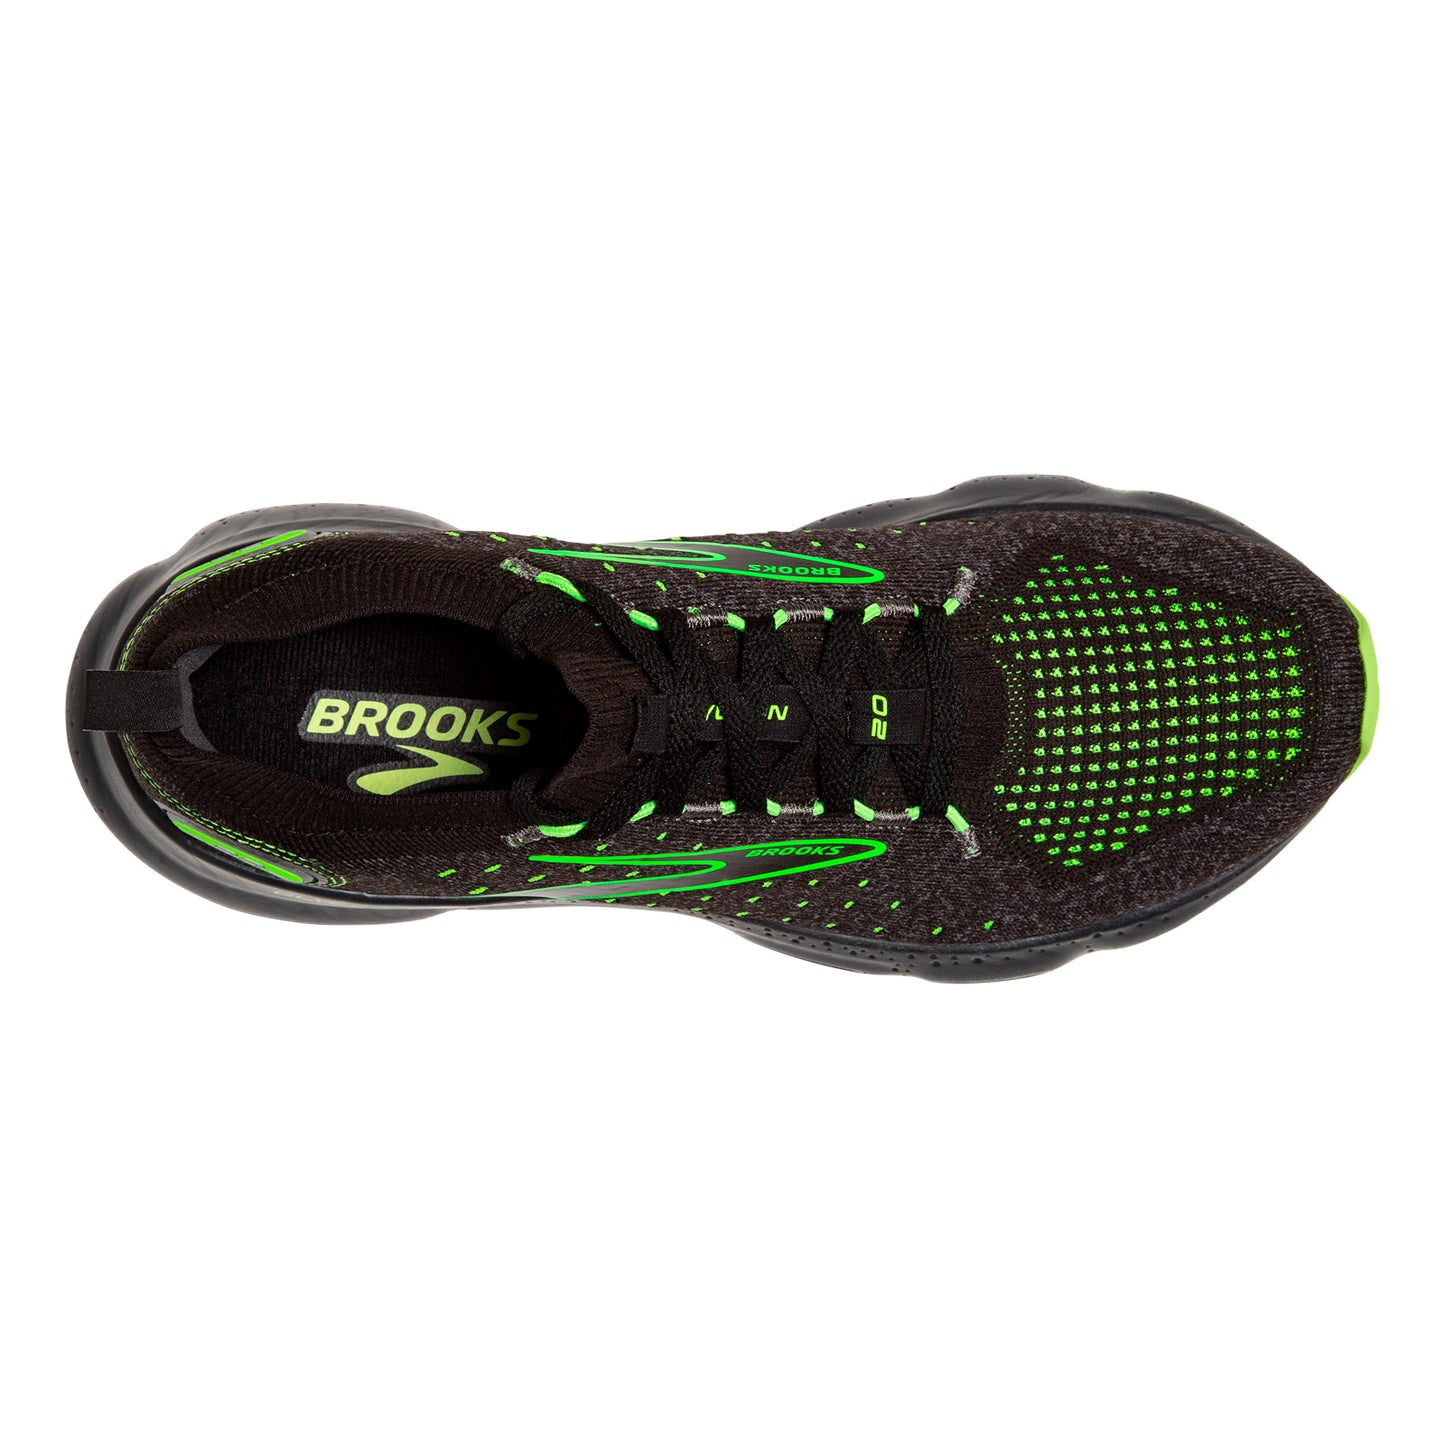 Peltz Shoes  Men's Brooks Glycerin 20 Stealth Fit Running Shoe Black/Green 110384 1D 092